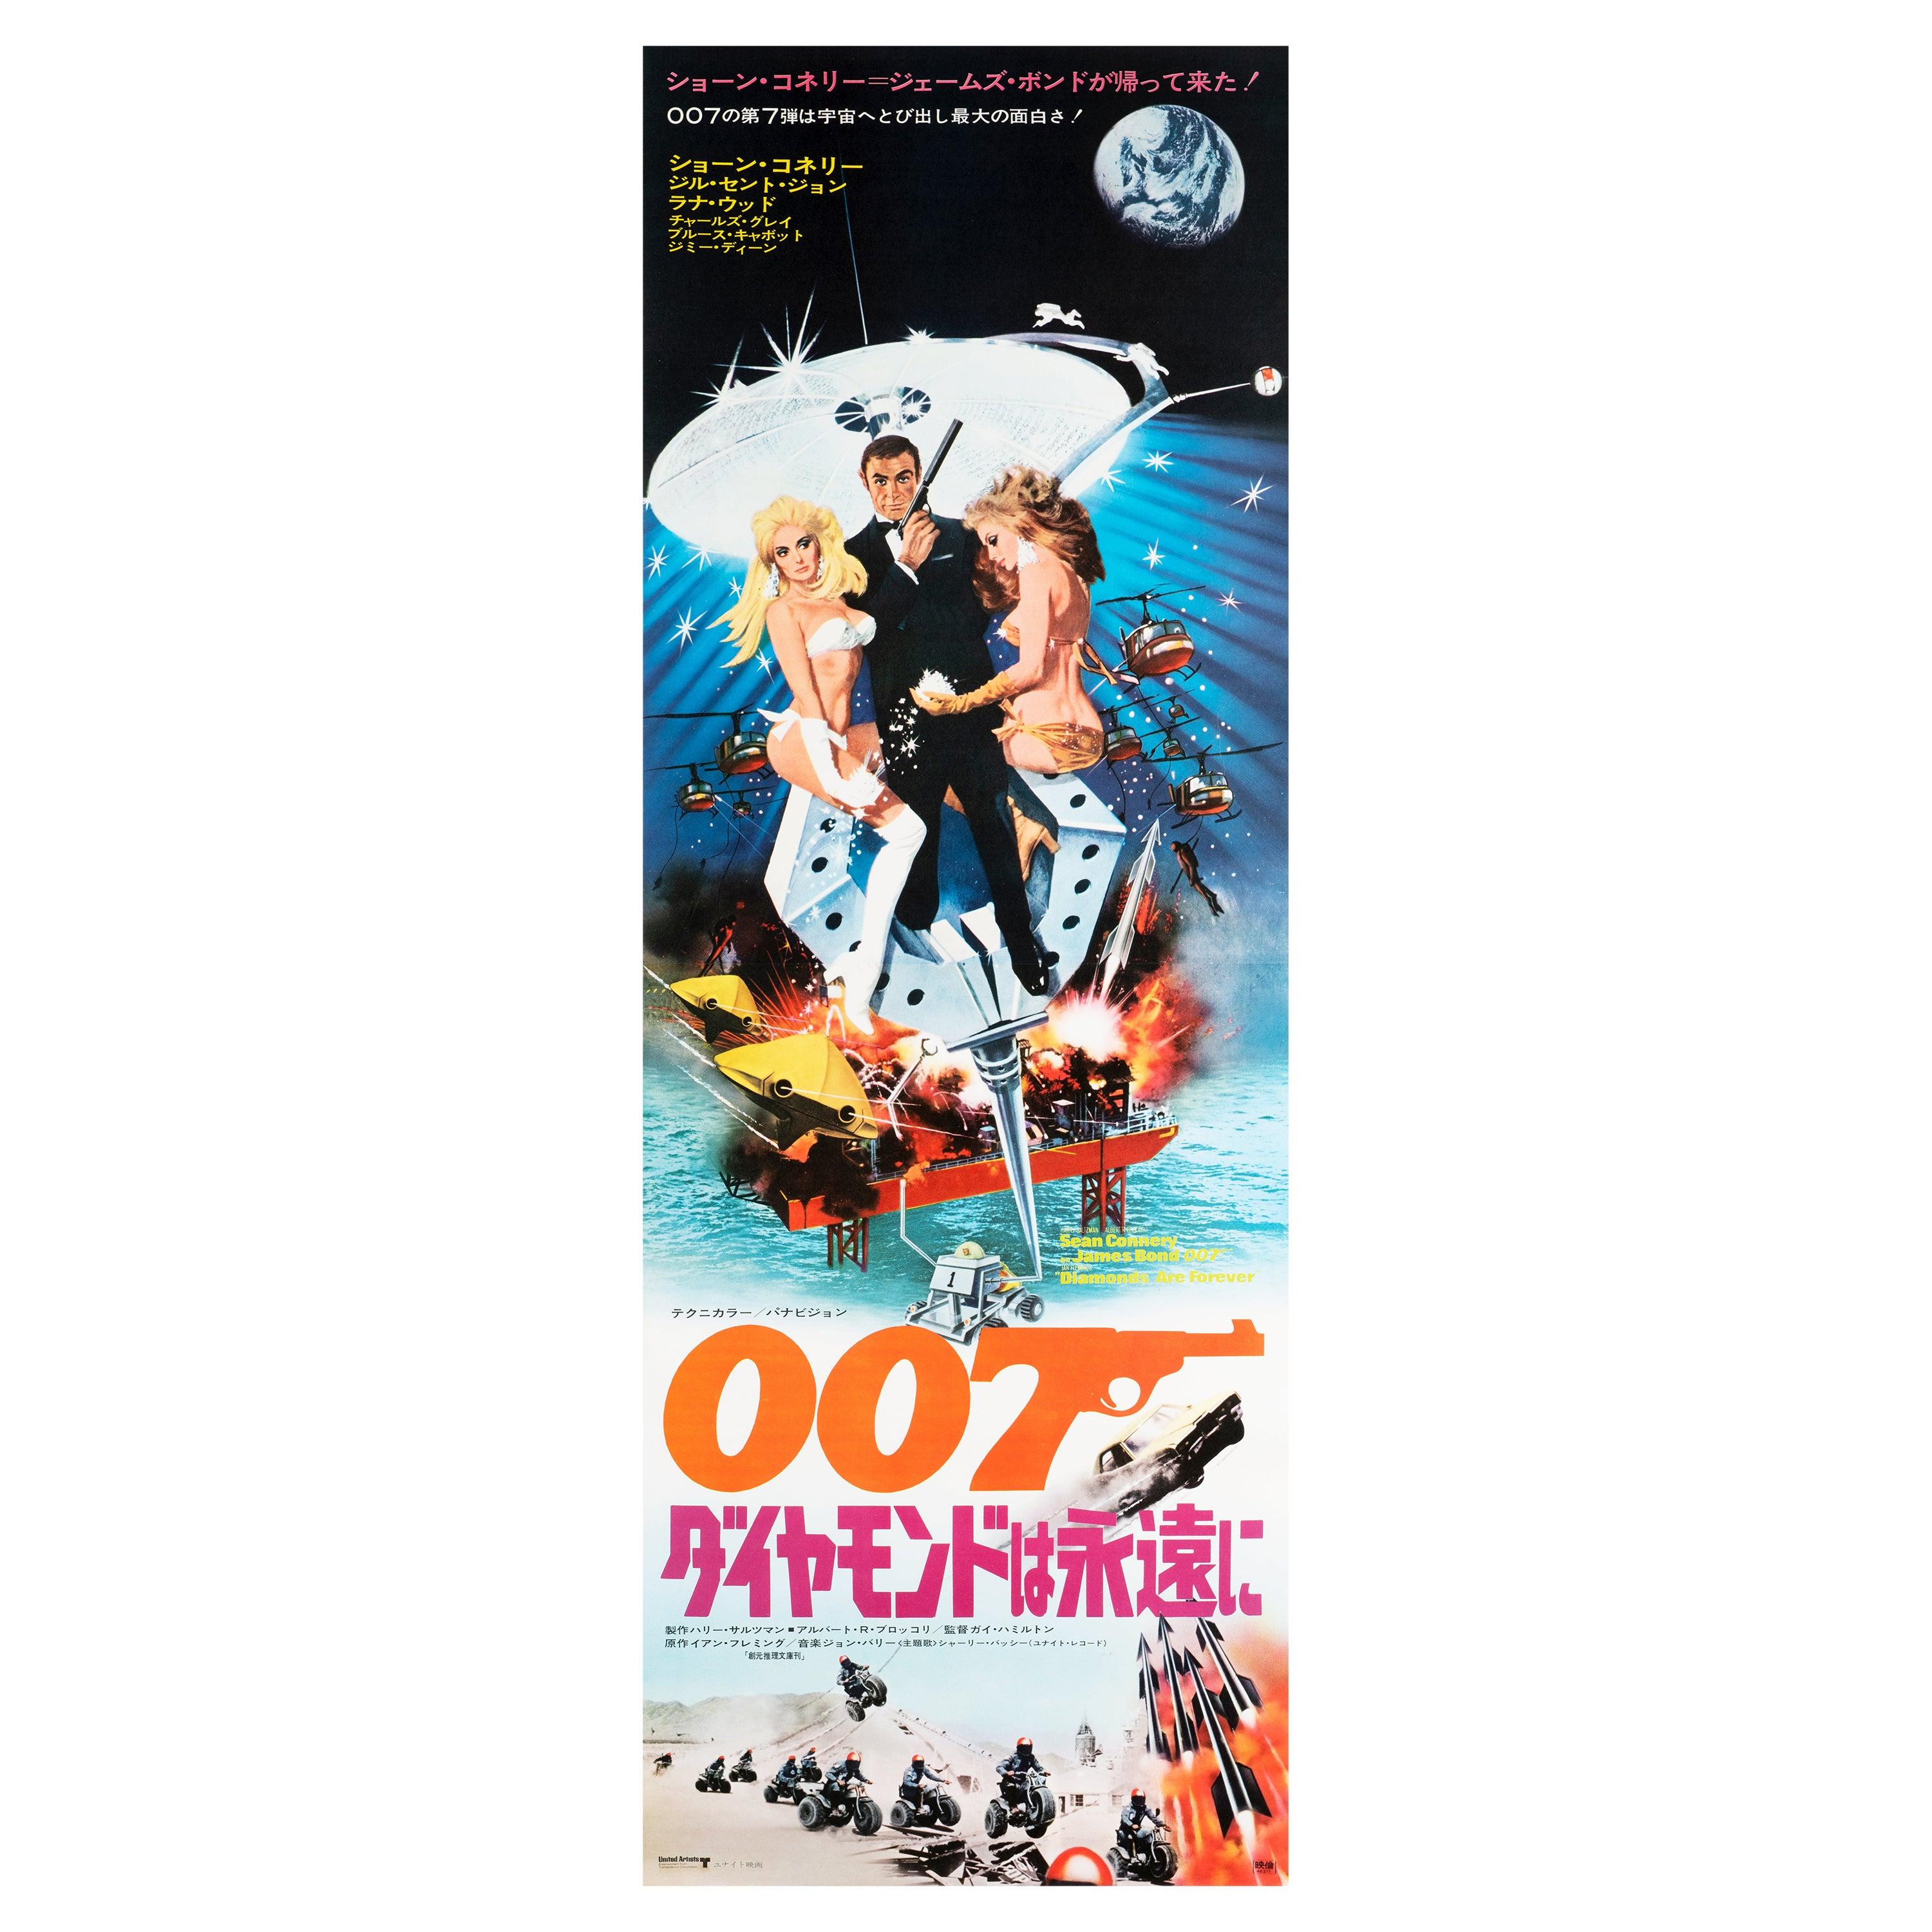 James Bond 'Diamonds Are Forever' Original Vintage Japanese Movie Poster, 1971 - Art by Robert E. McGinnis